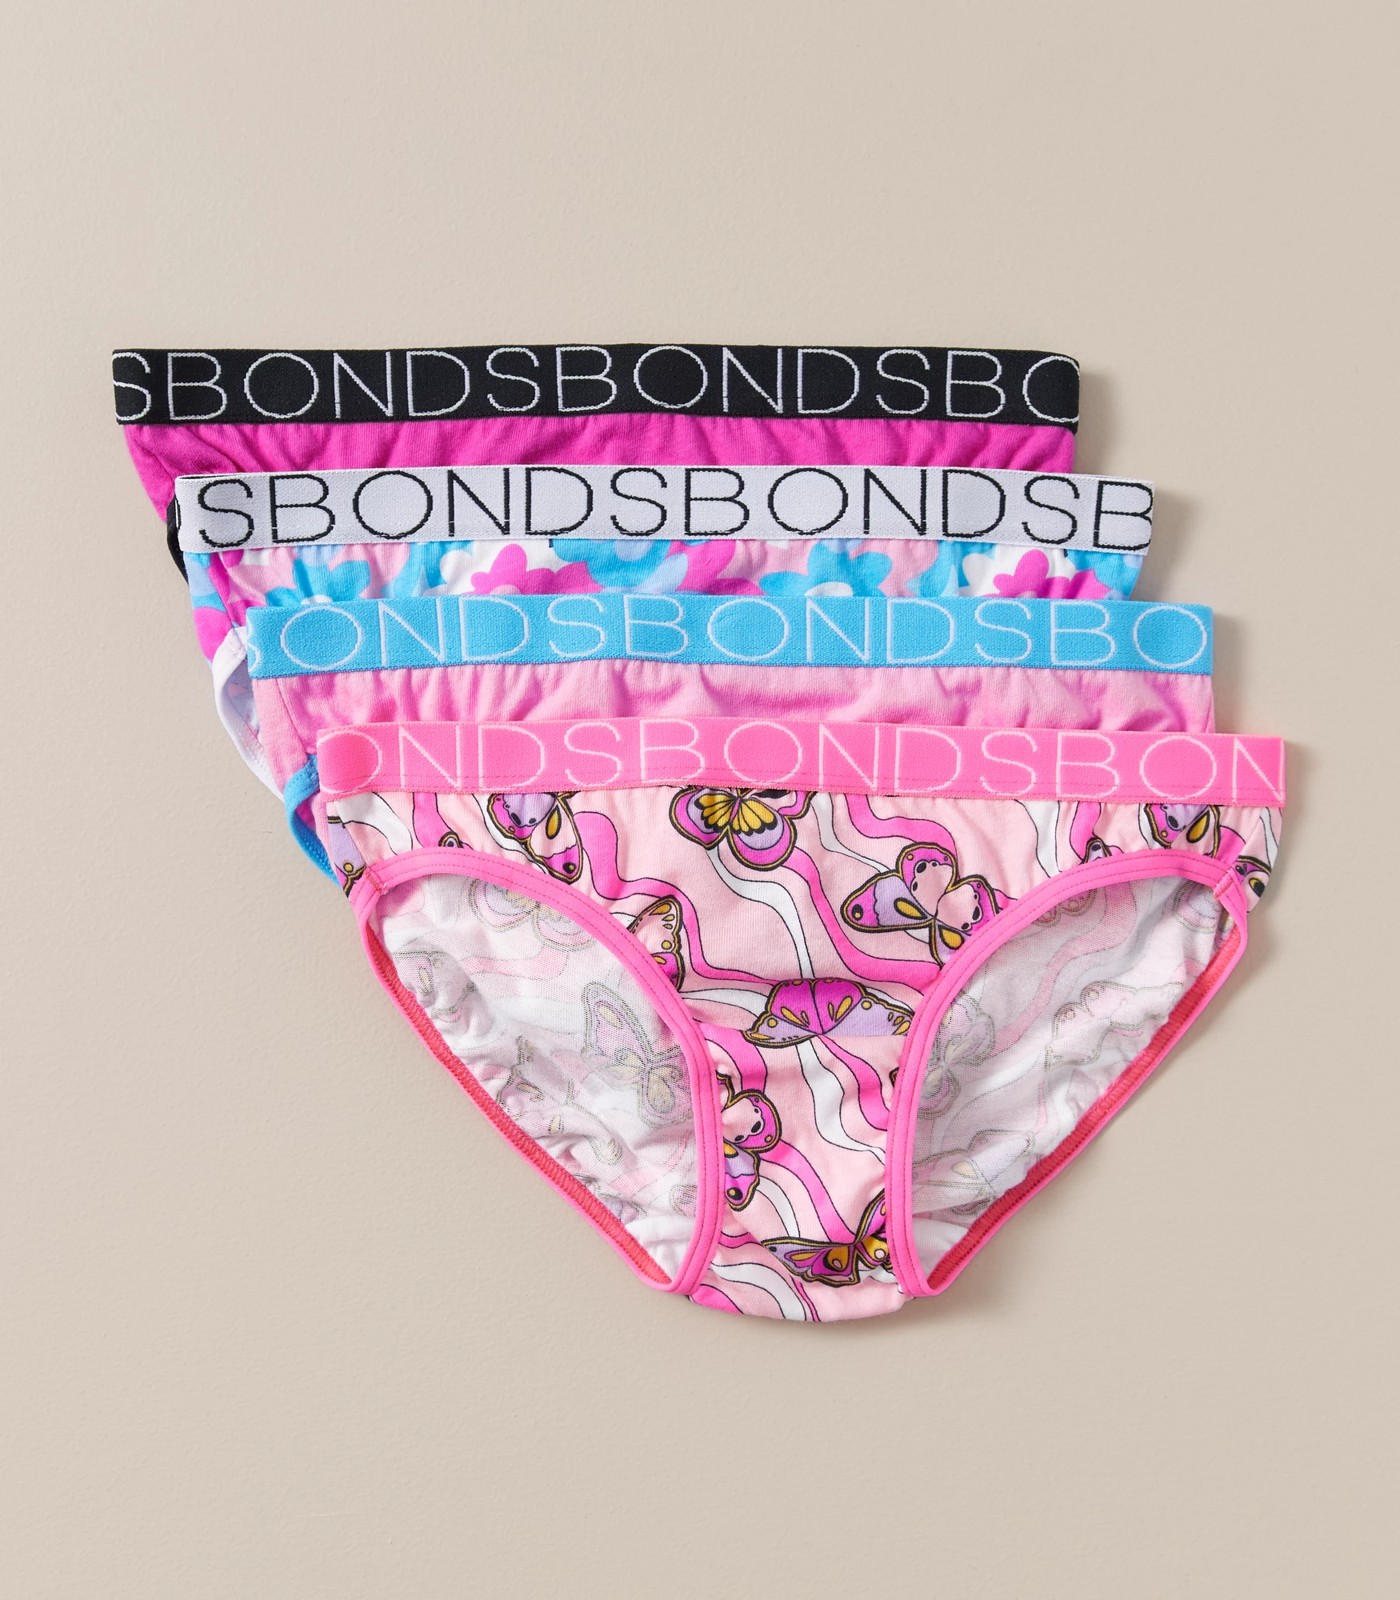 Printed Bikini Underwear 4-Pack for Toddler Girls